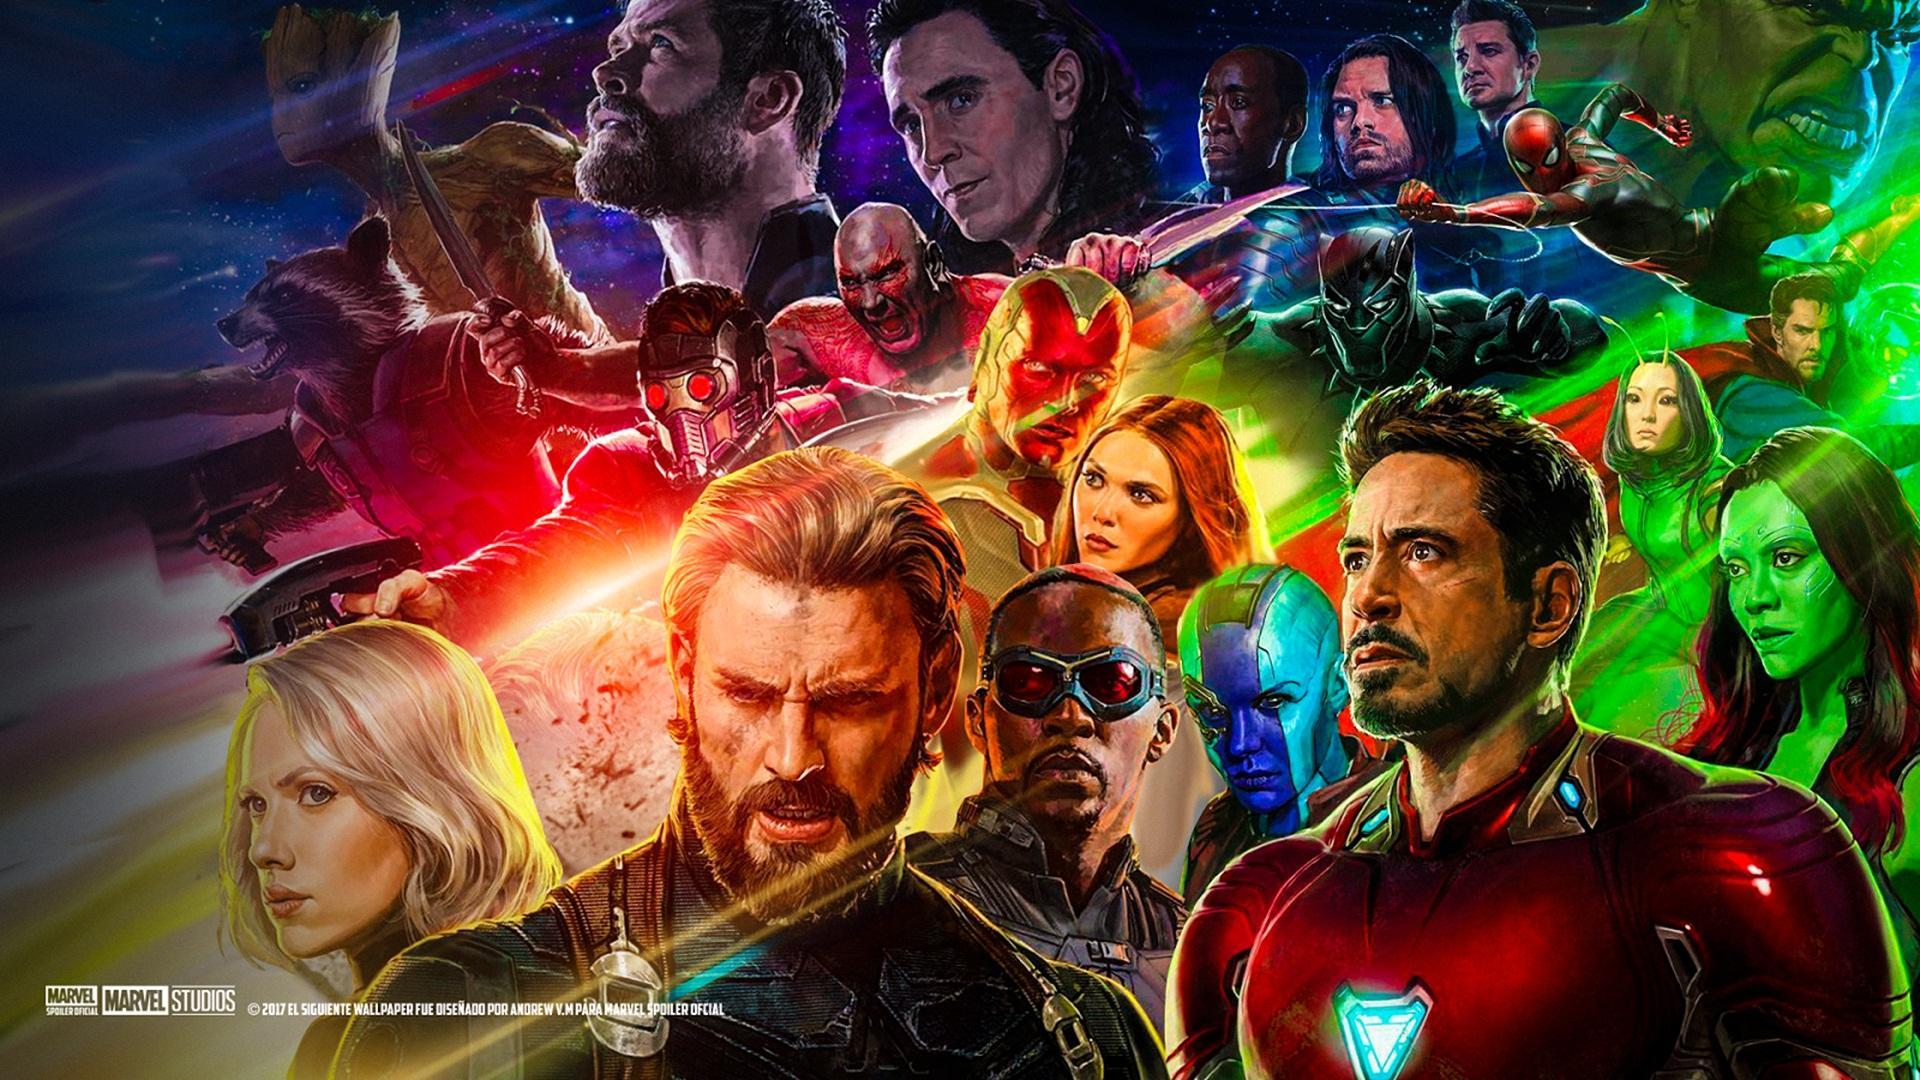 Avengers Computer Wallpaper, Free Stock Wallpaper